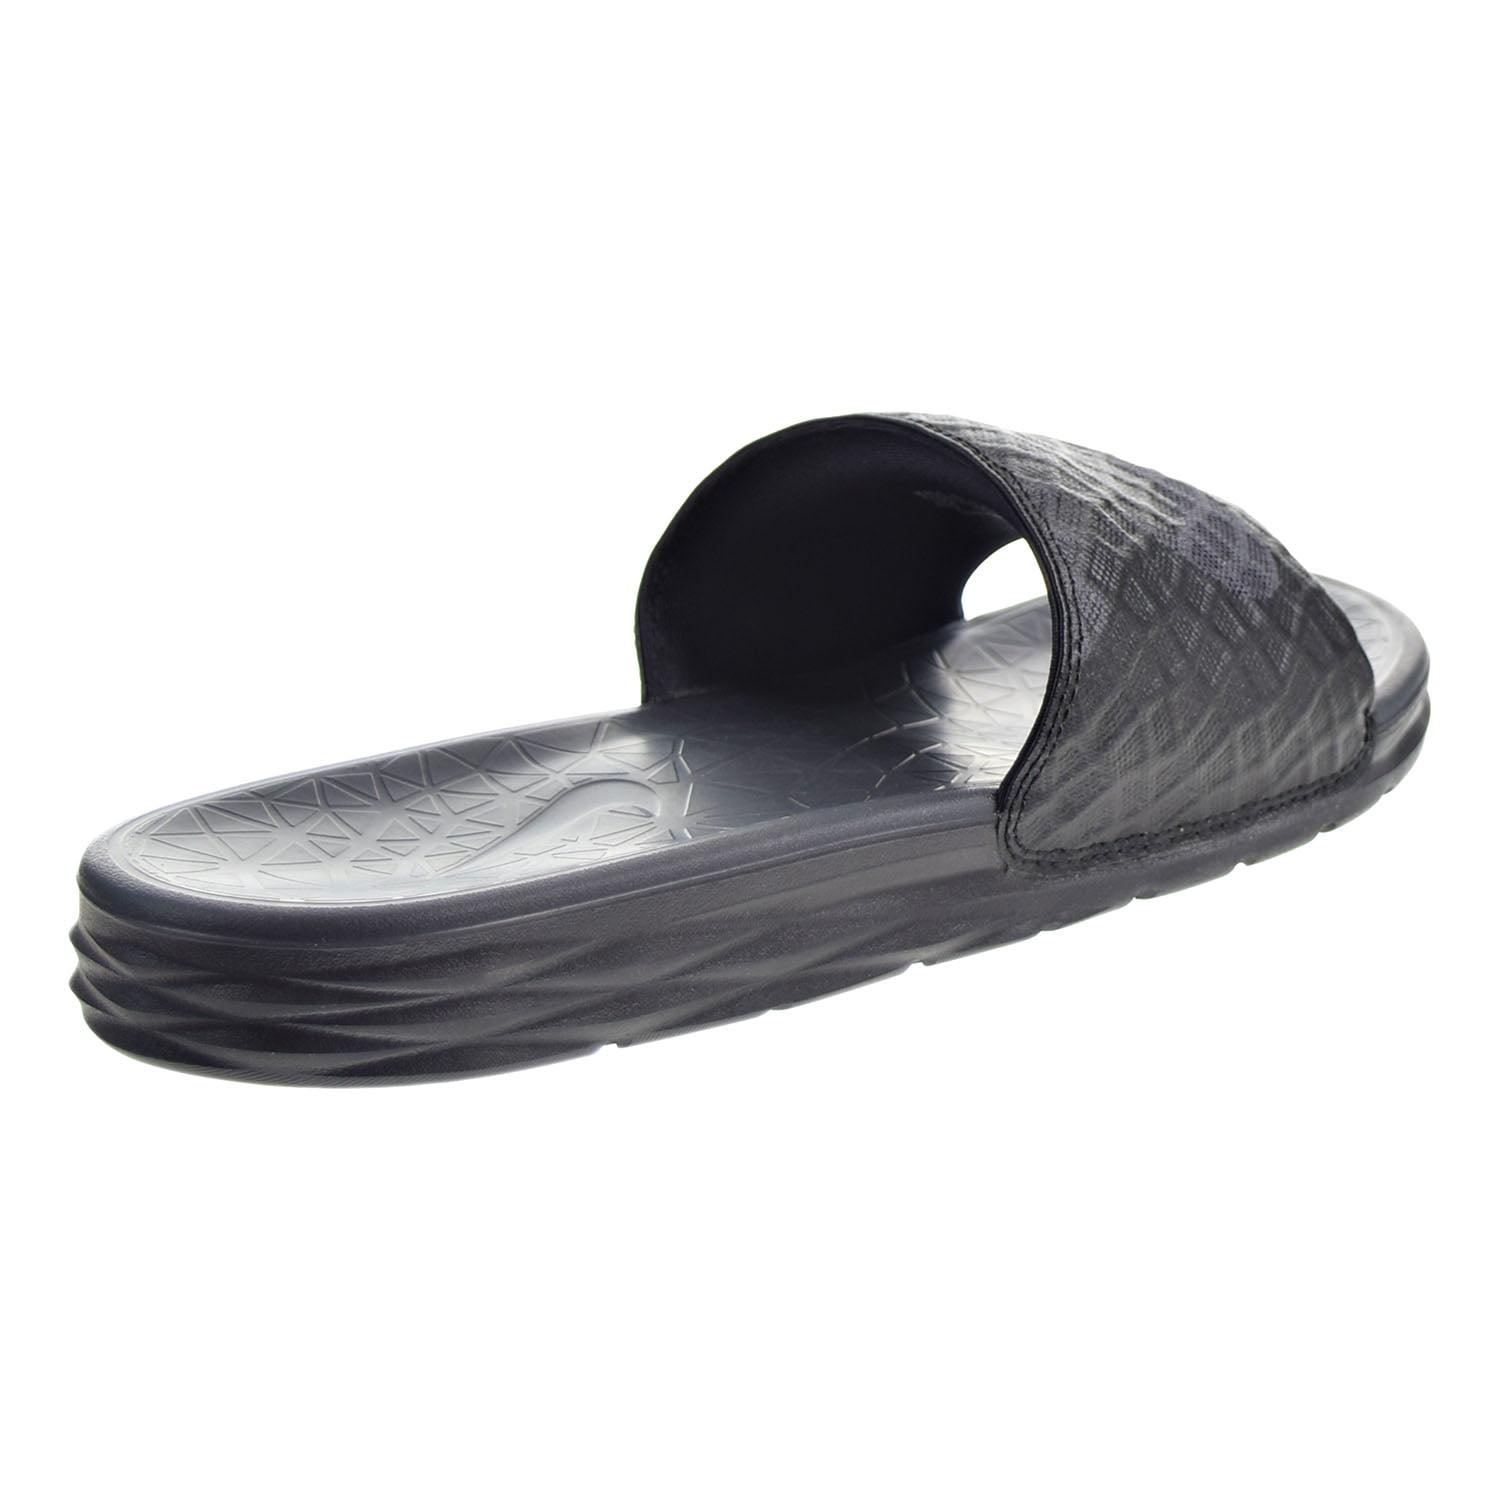 Mutuo Regenerador Dirigir Nike Men's Benassi Solarsoft Sandals Black 705474-091 (7 D(M) US) -  Walmart.com